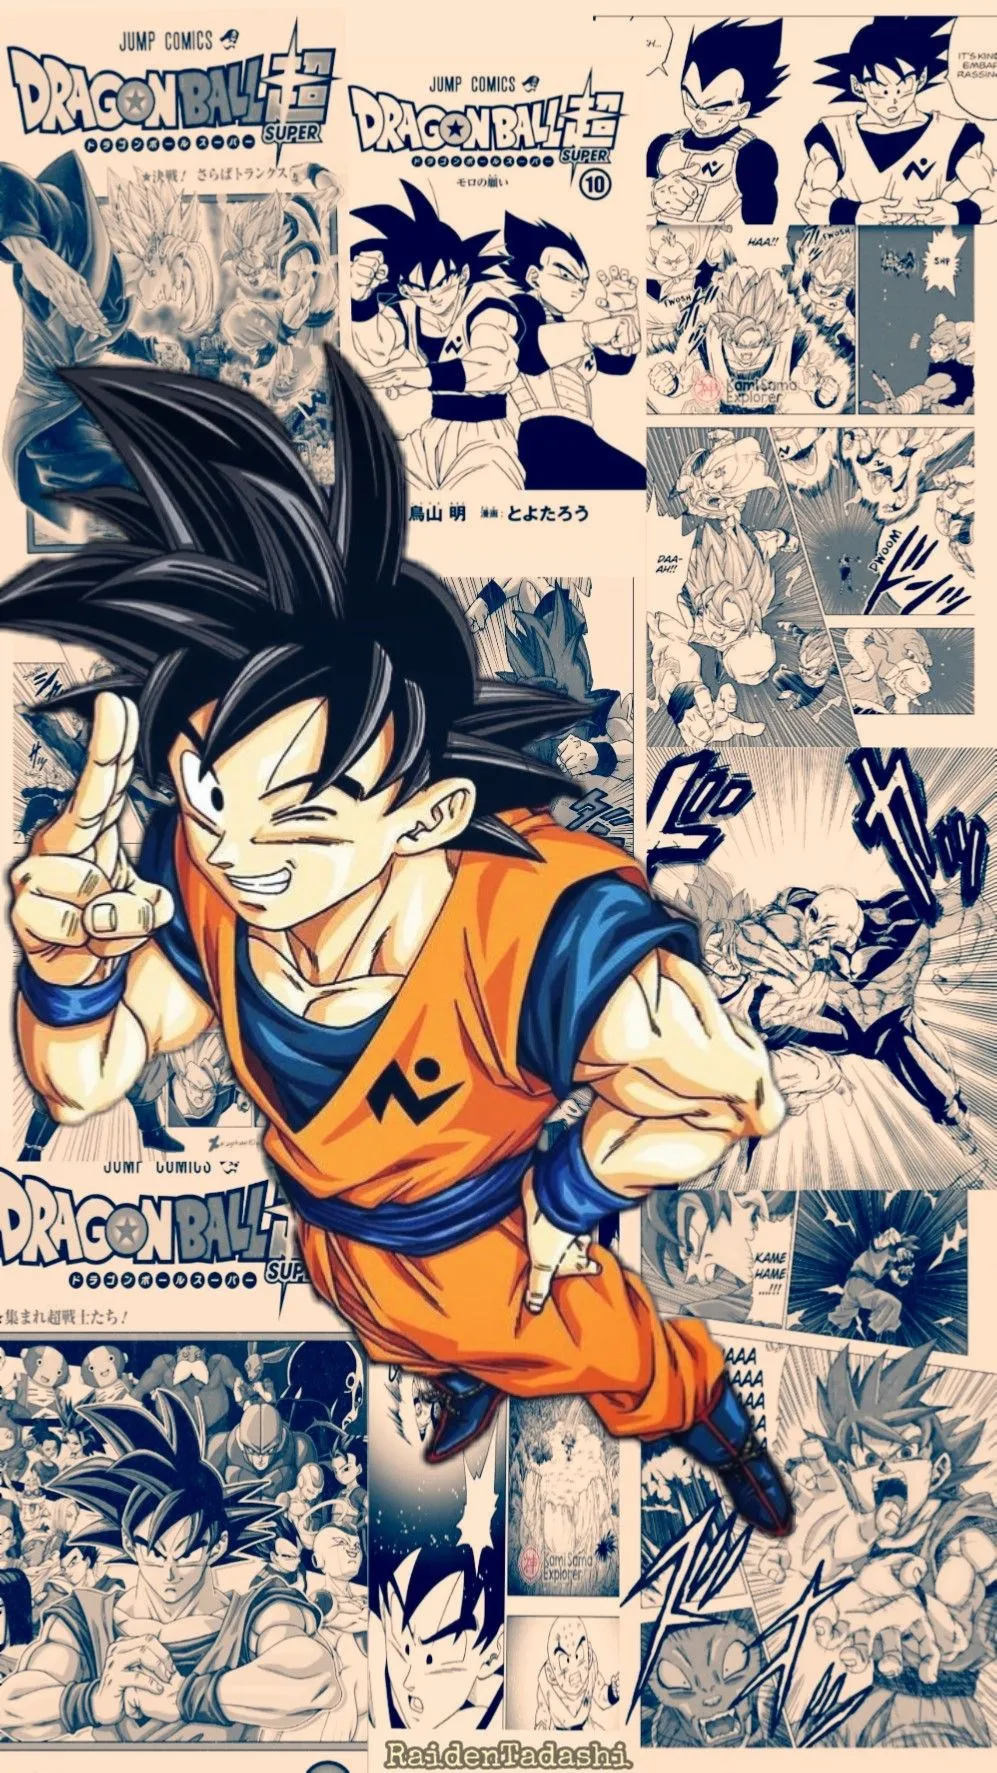 Pin by Skyzzis on Dragon Ball  Goku wallpaper, Anime wallpaper